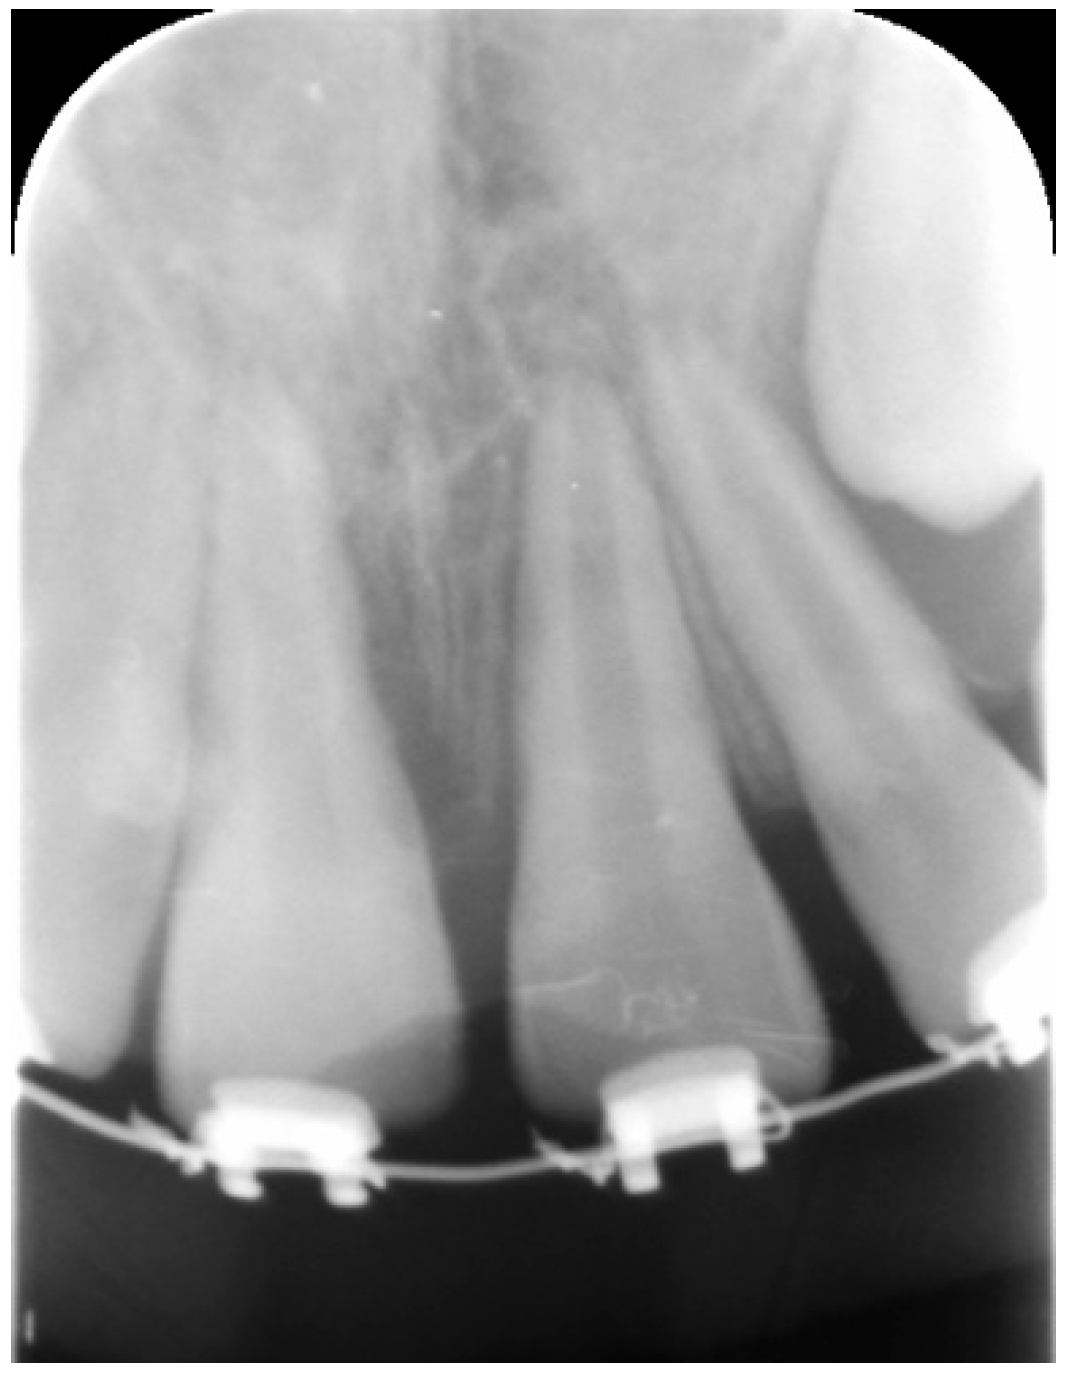 external resorption of tooth